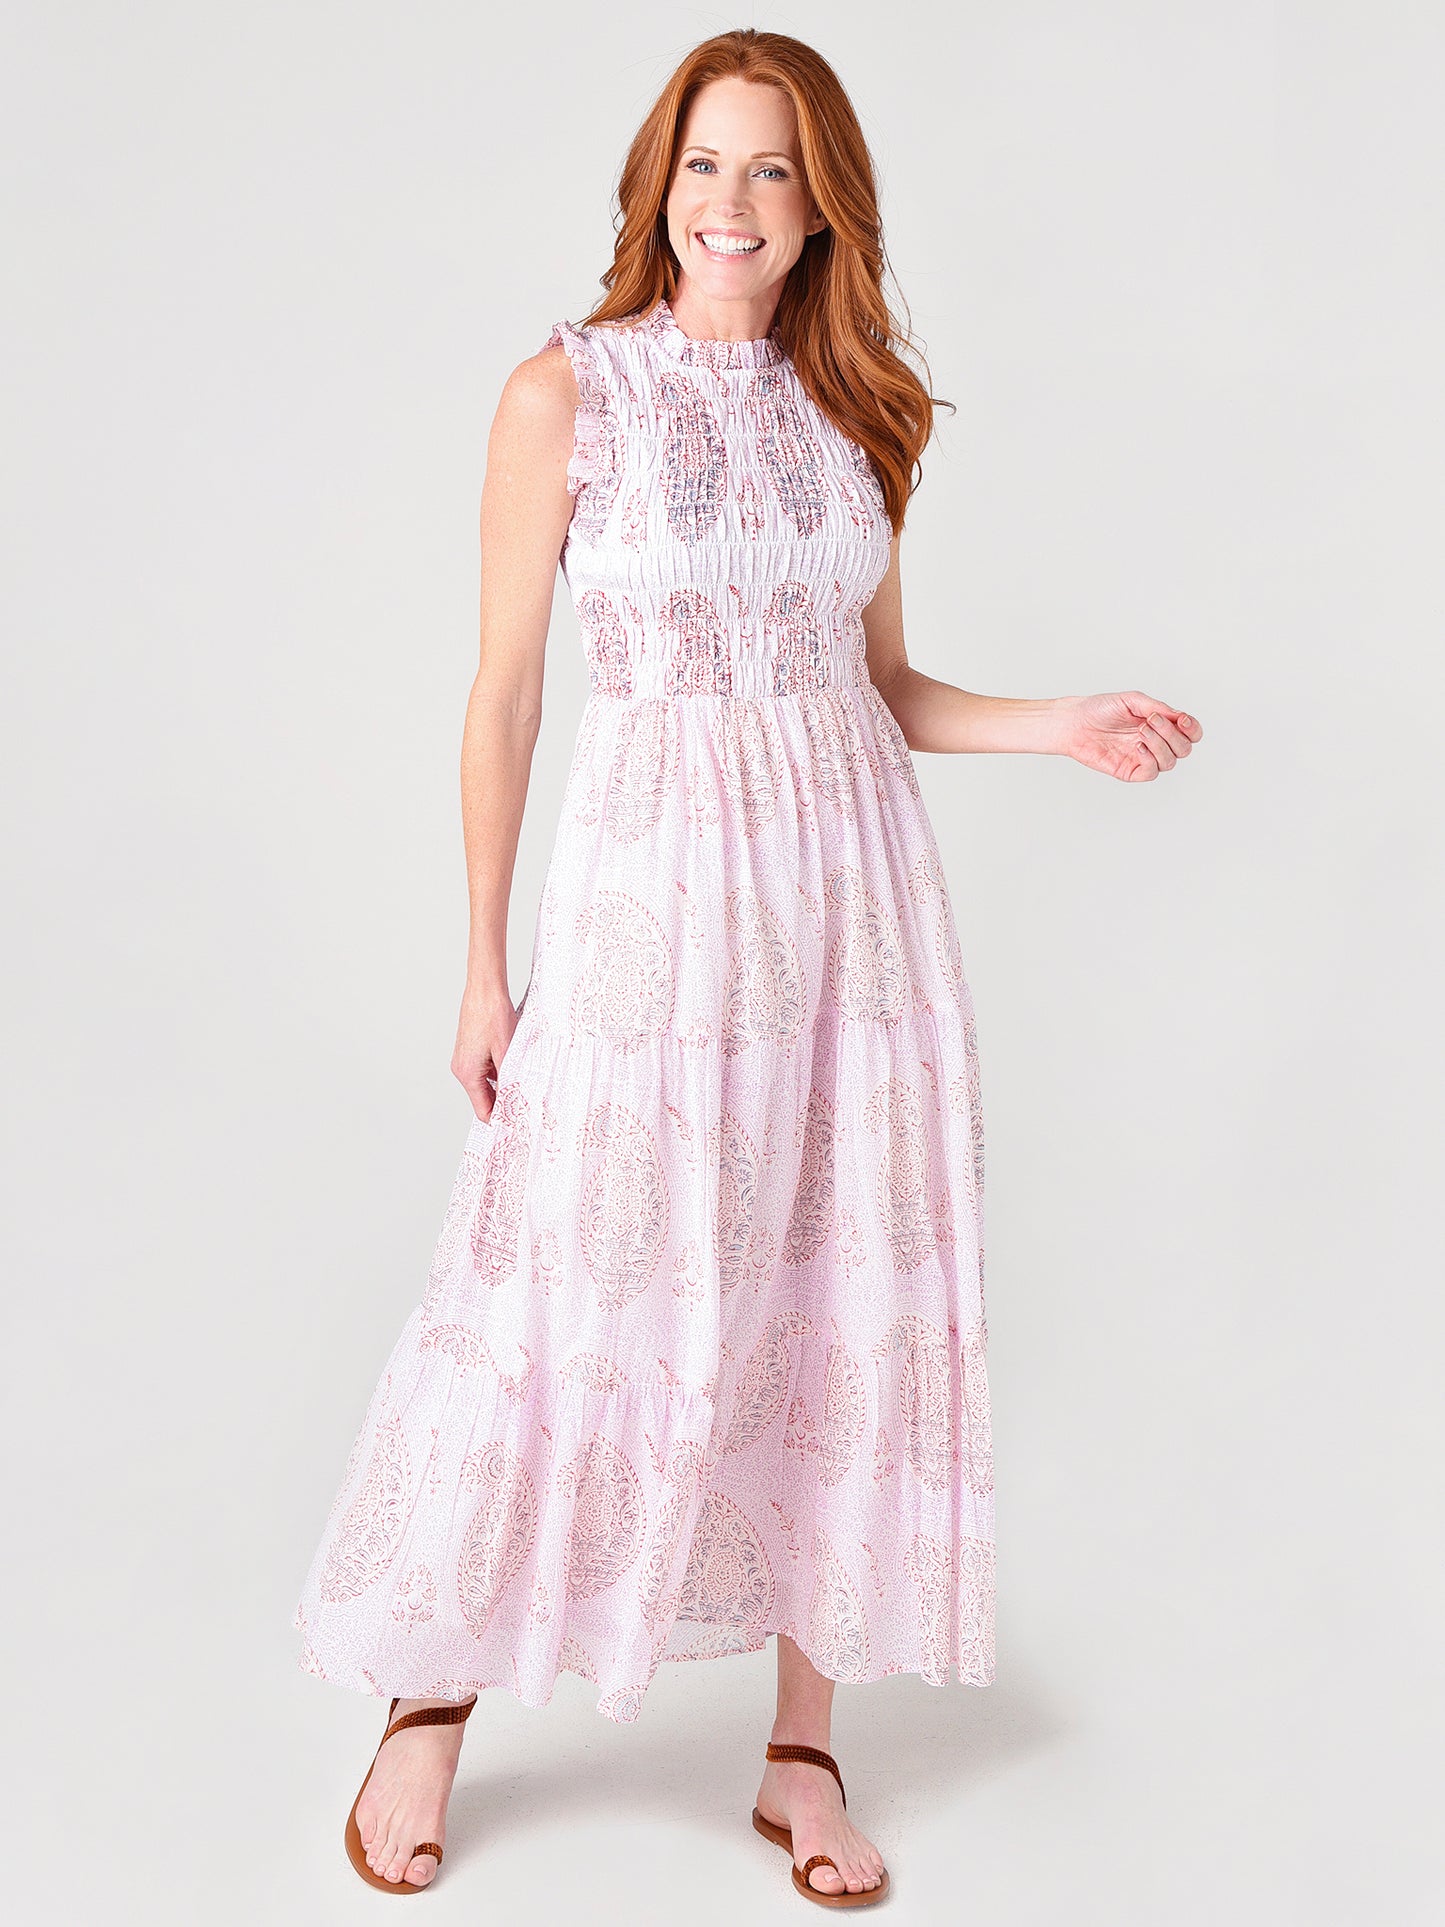 Oliphant Women's Sleeveless Smocked Maxi Dress